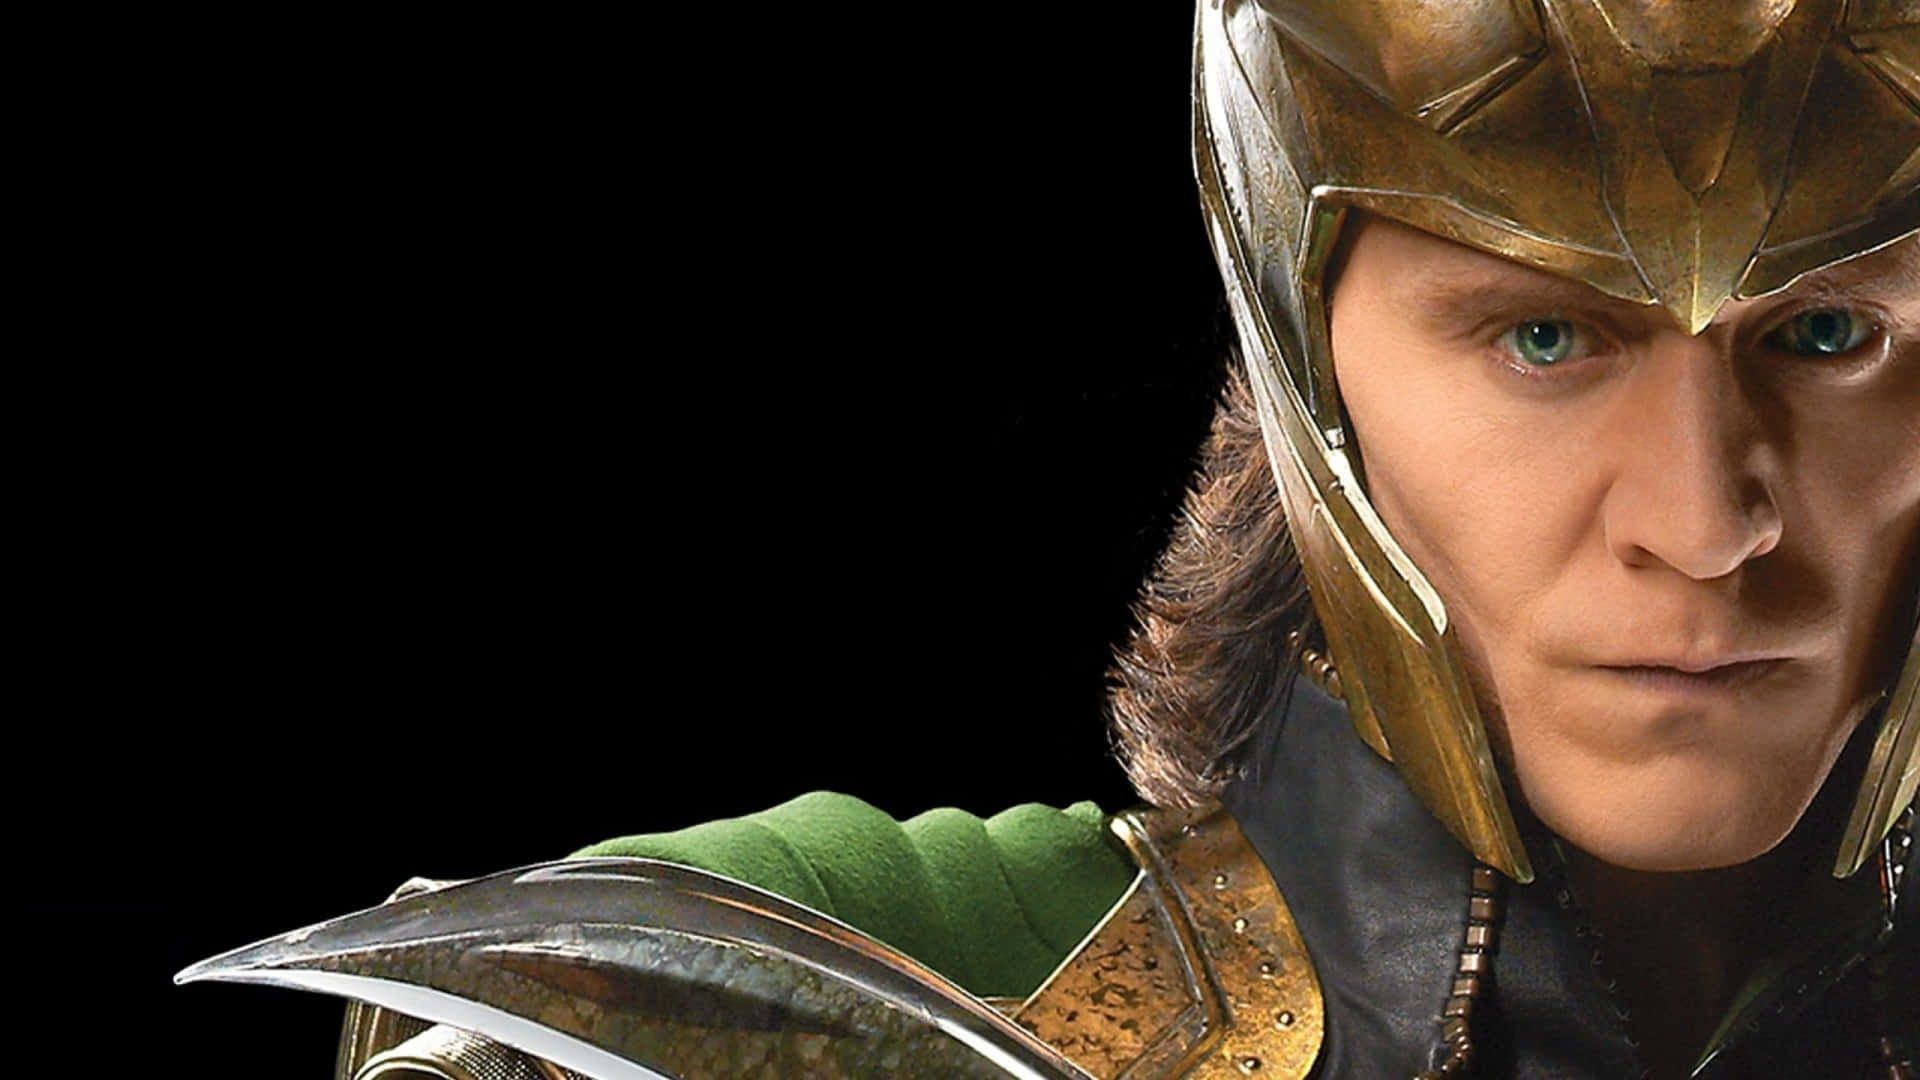 Trickster-guden Loki bringer narrestreger og kaos. Wallpaper